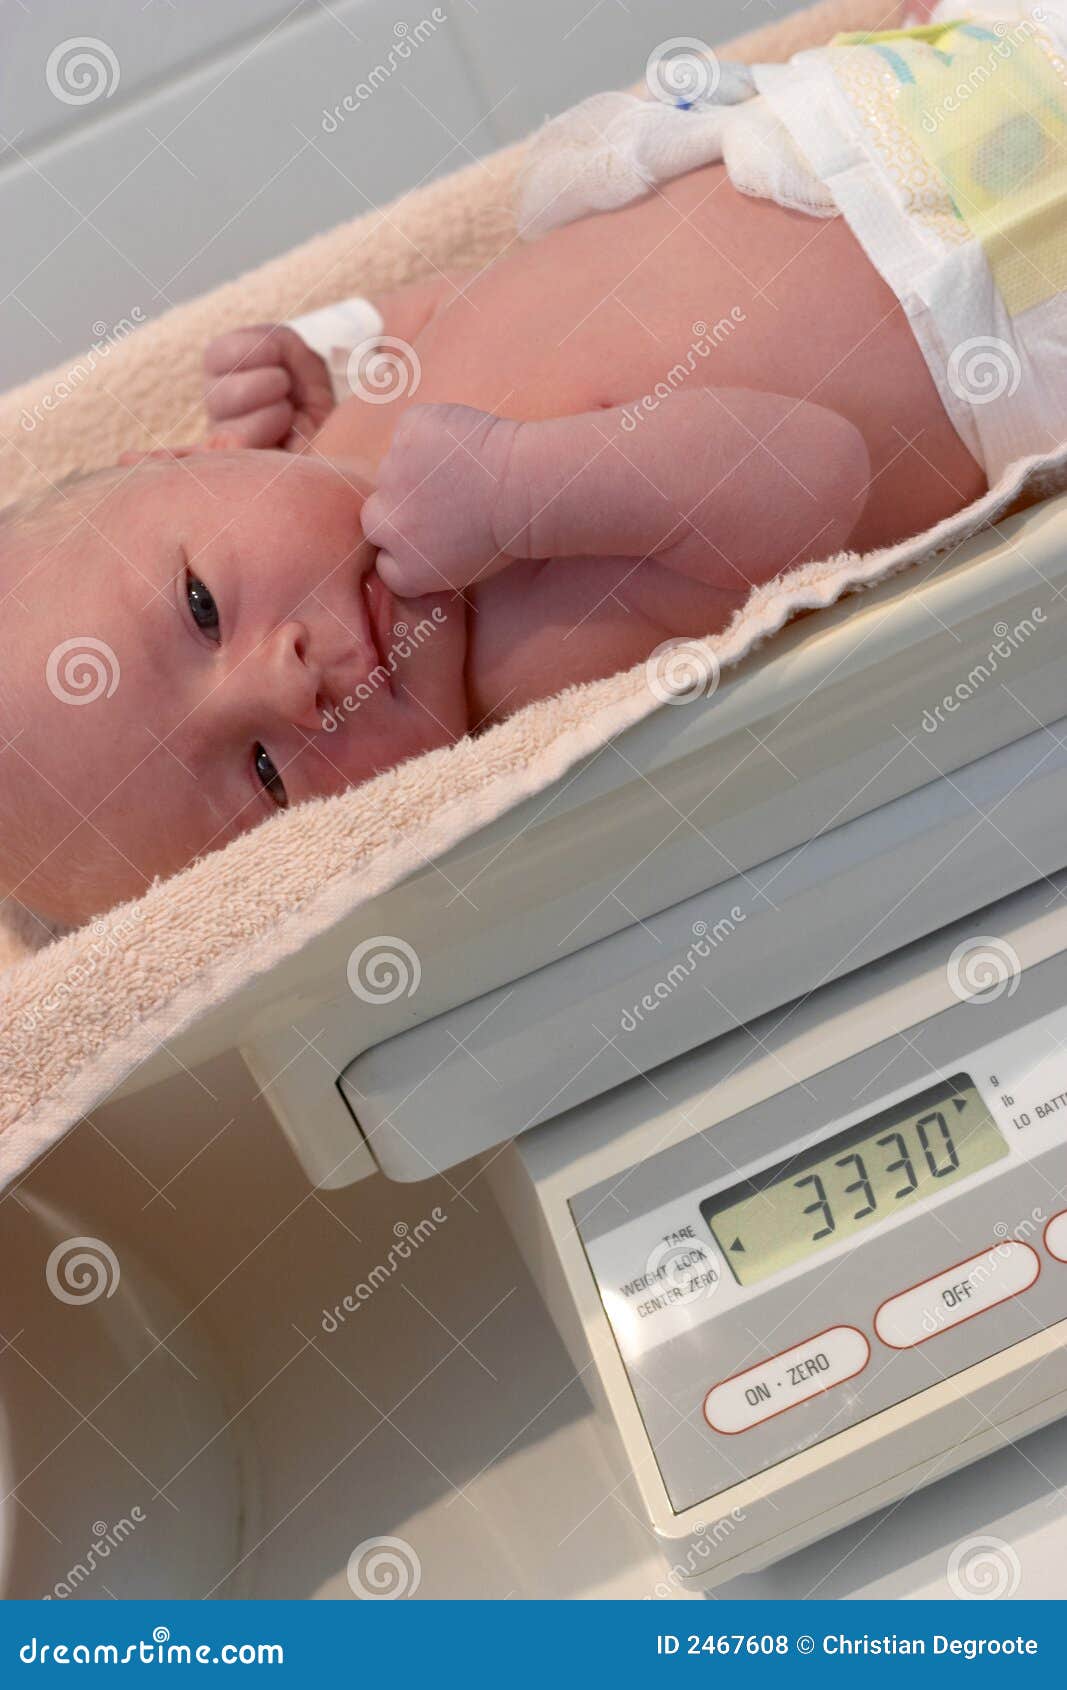 weighing a newborn baby